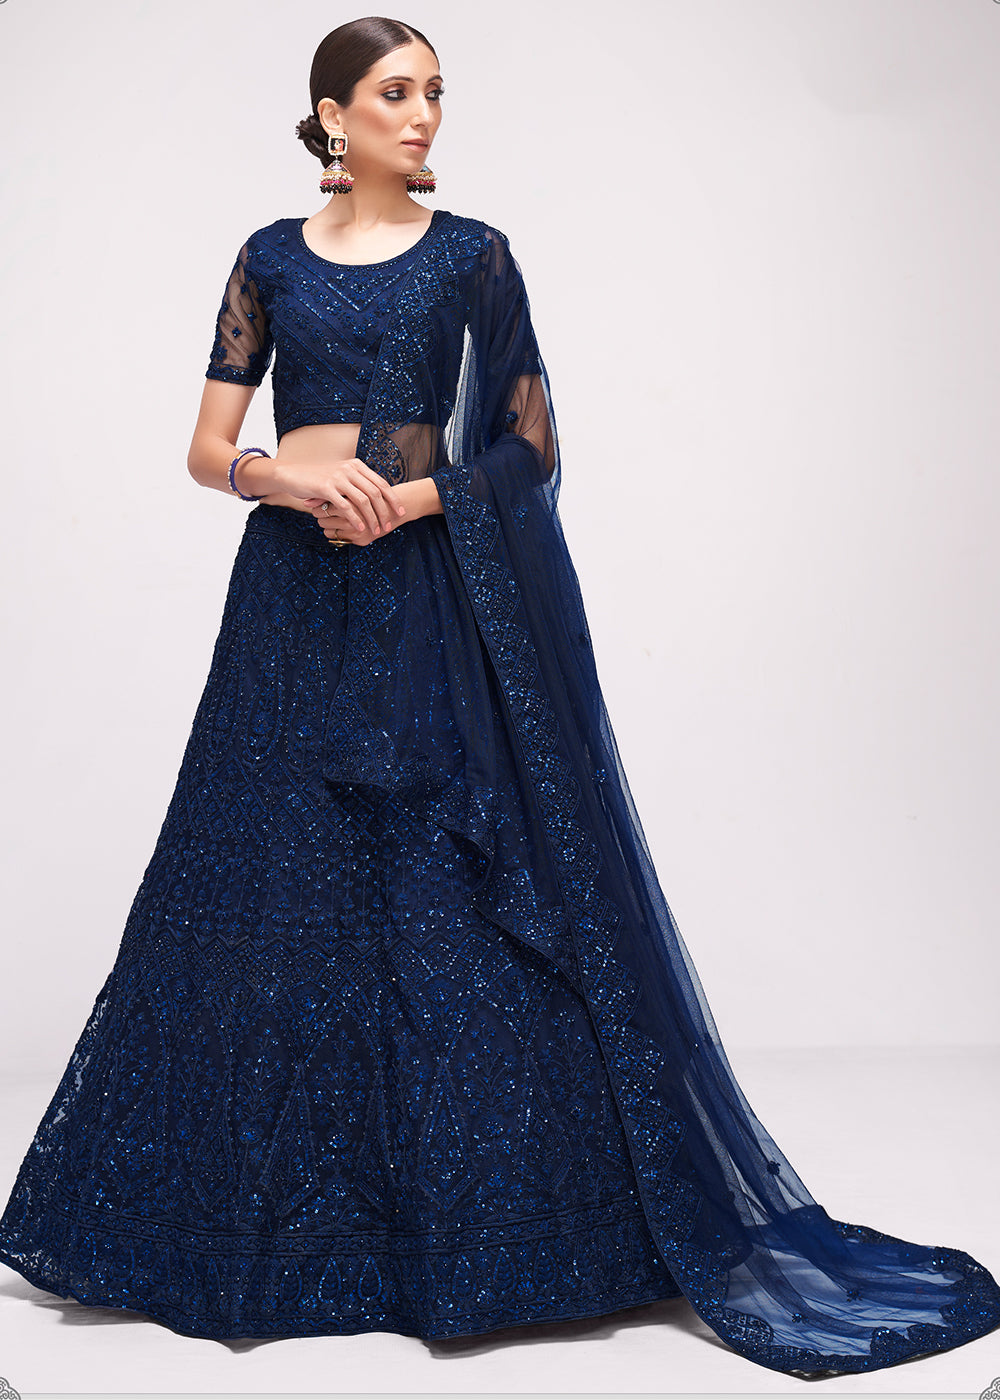 Buy Now Incredible Dark Blue Cording Designer Wedding Bridal Lehenga Choli Online in Canada, UK, USA & Worldwide at Empress Clothing.